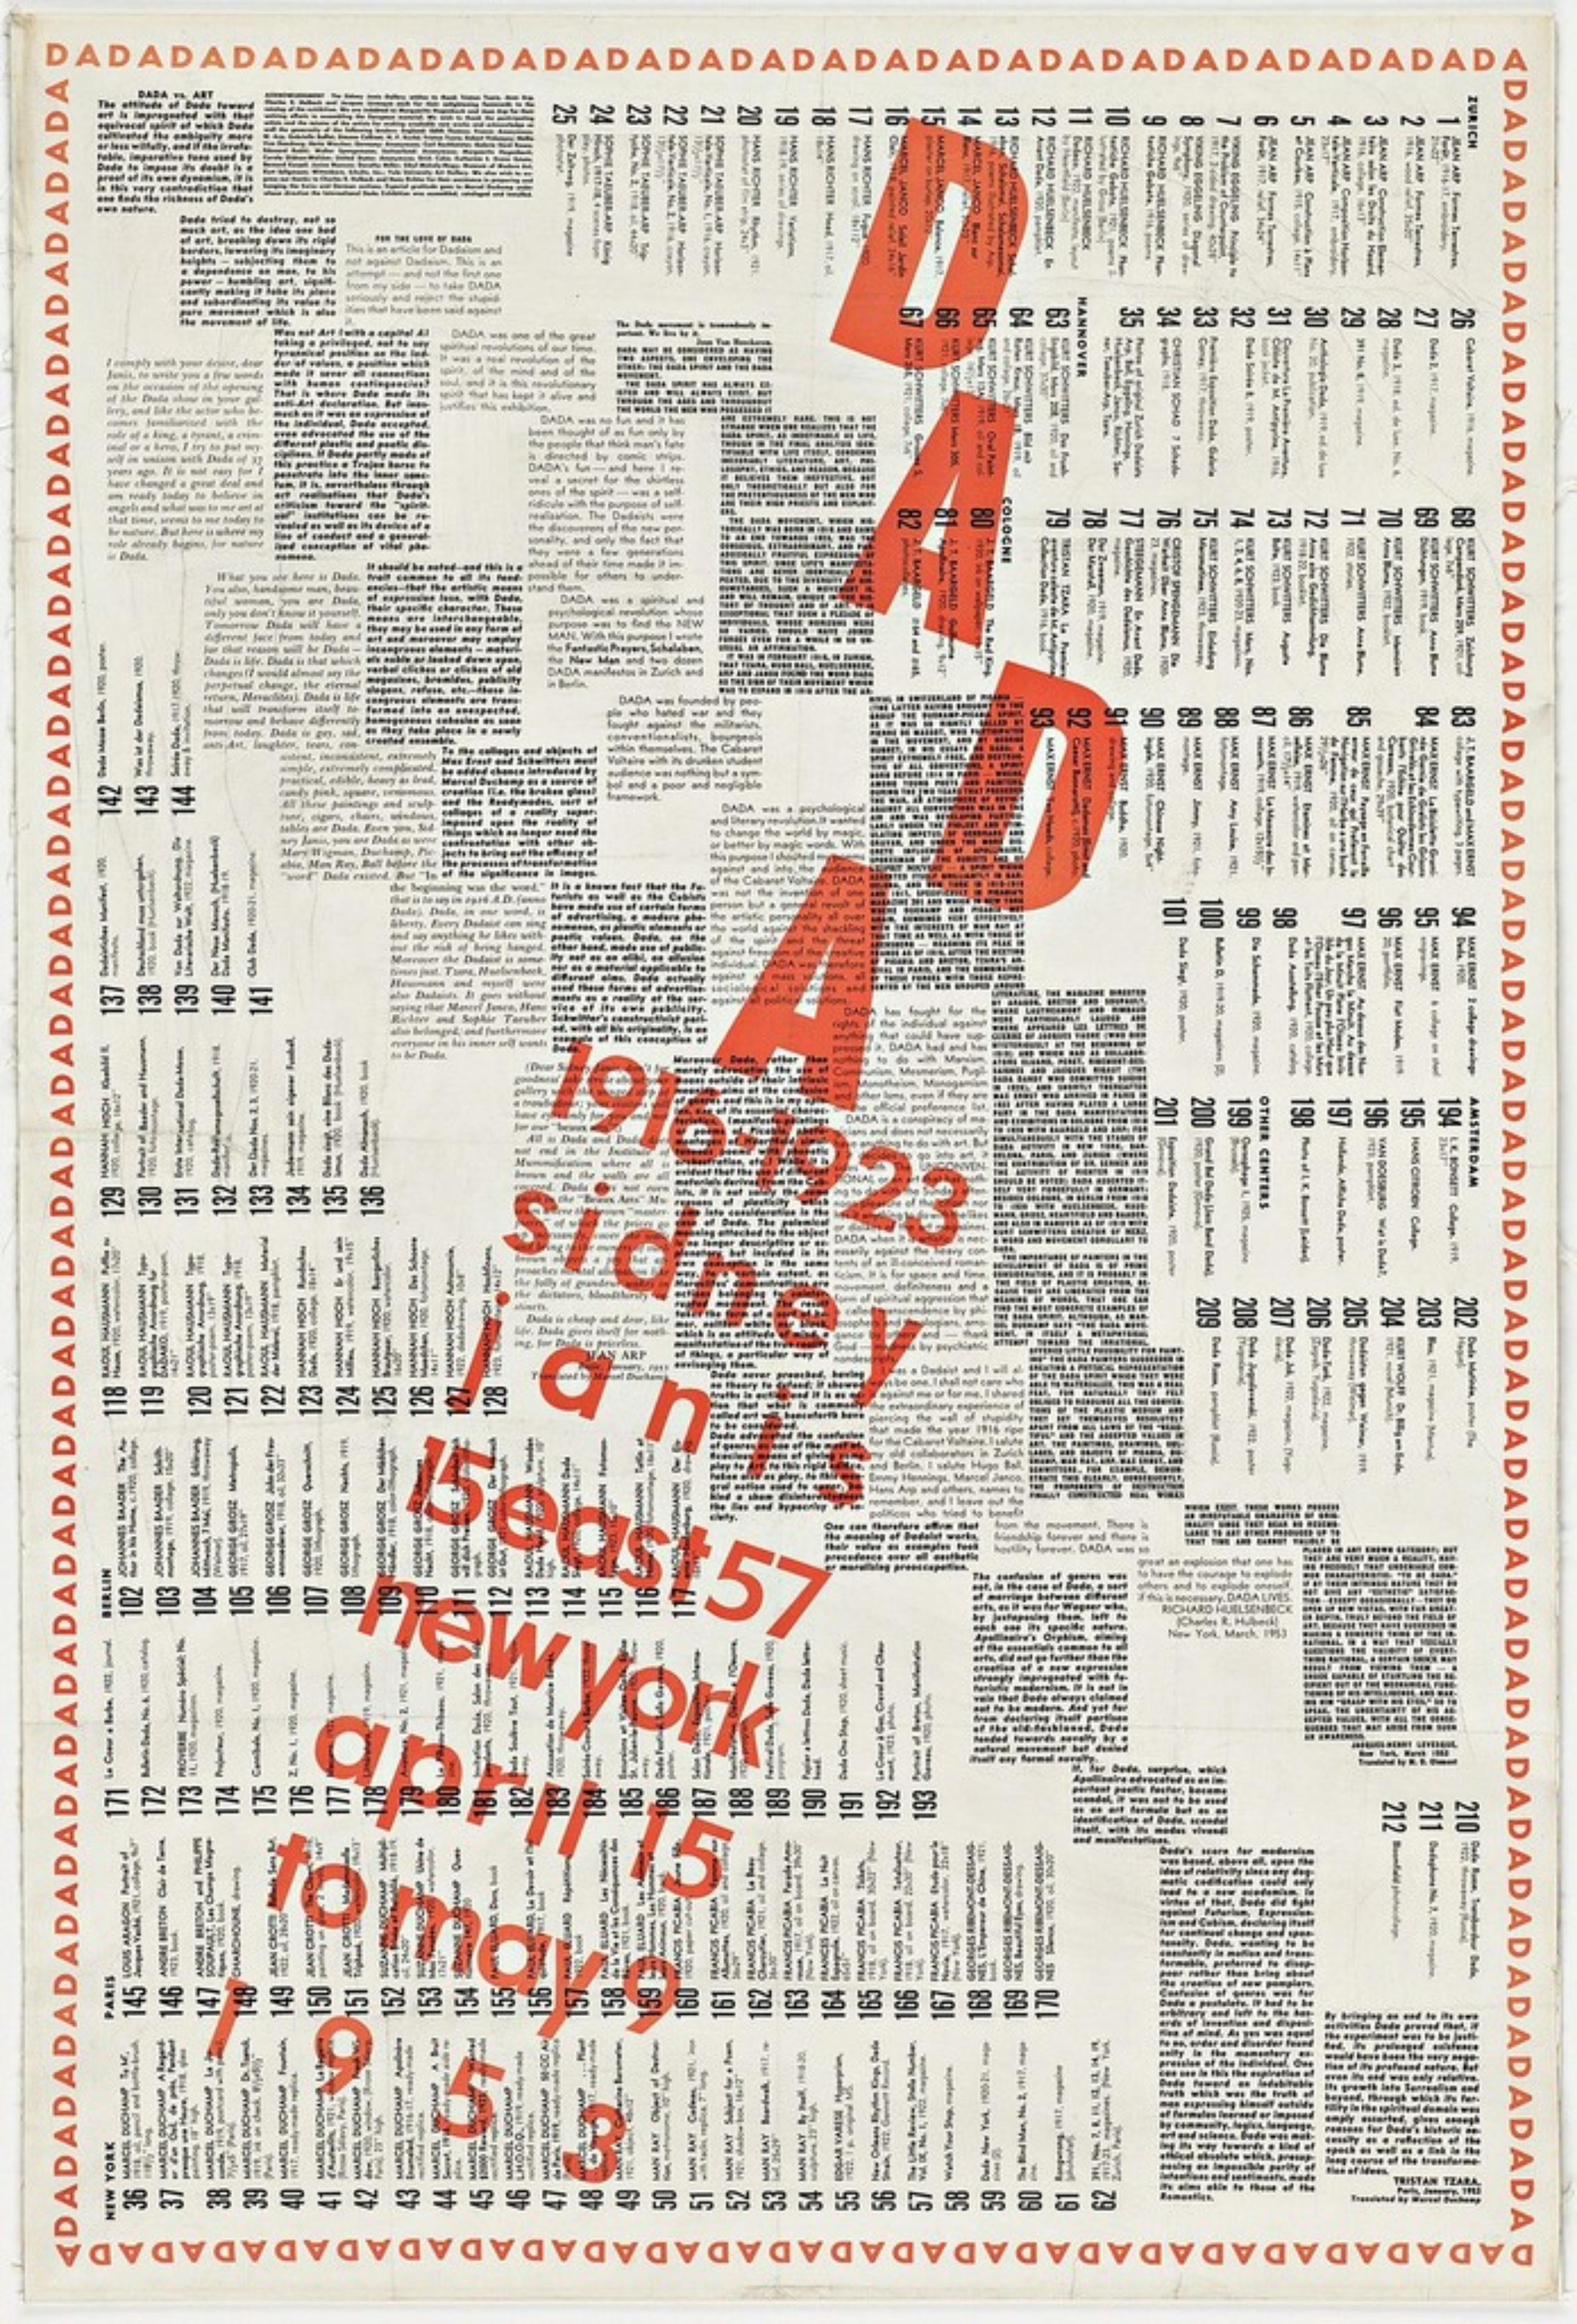 DADA historic Sidney Janis gallery mixed media, mid century designed by Duchamp - Mixed Media Art by Marcel Duchamp